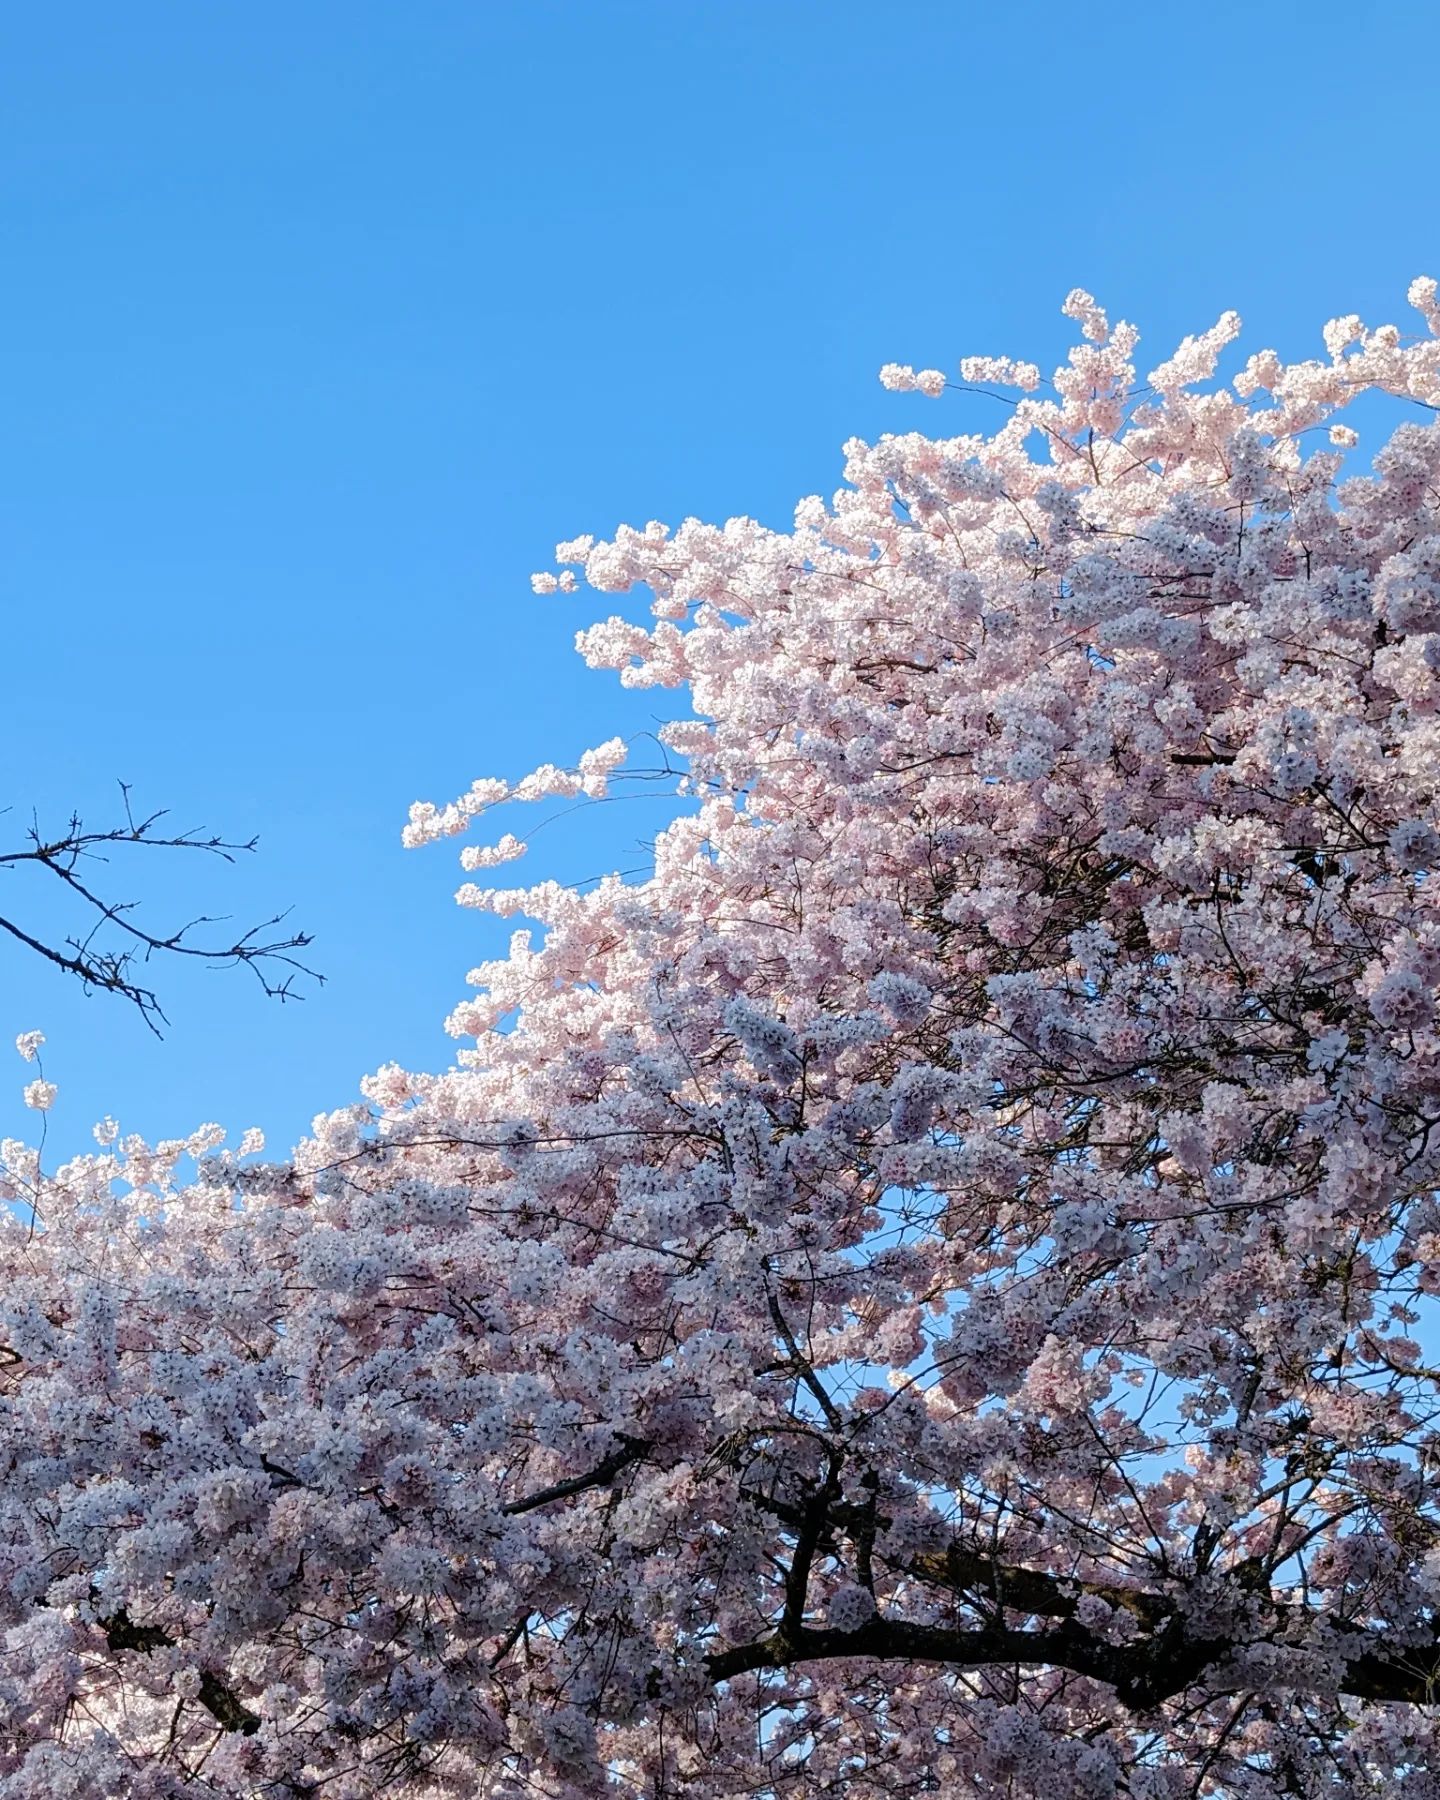 Springtime in Portland 🌸🌸🌸
My friends @spaceghostcosplay and @kirasins26 accompanied me to enjoy the Japanese cherry blossoms on the Portland waterfront today 💕
#hanami #cherryblossom #portland #oregon #exploreoregon #springtime #sakura